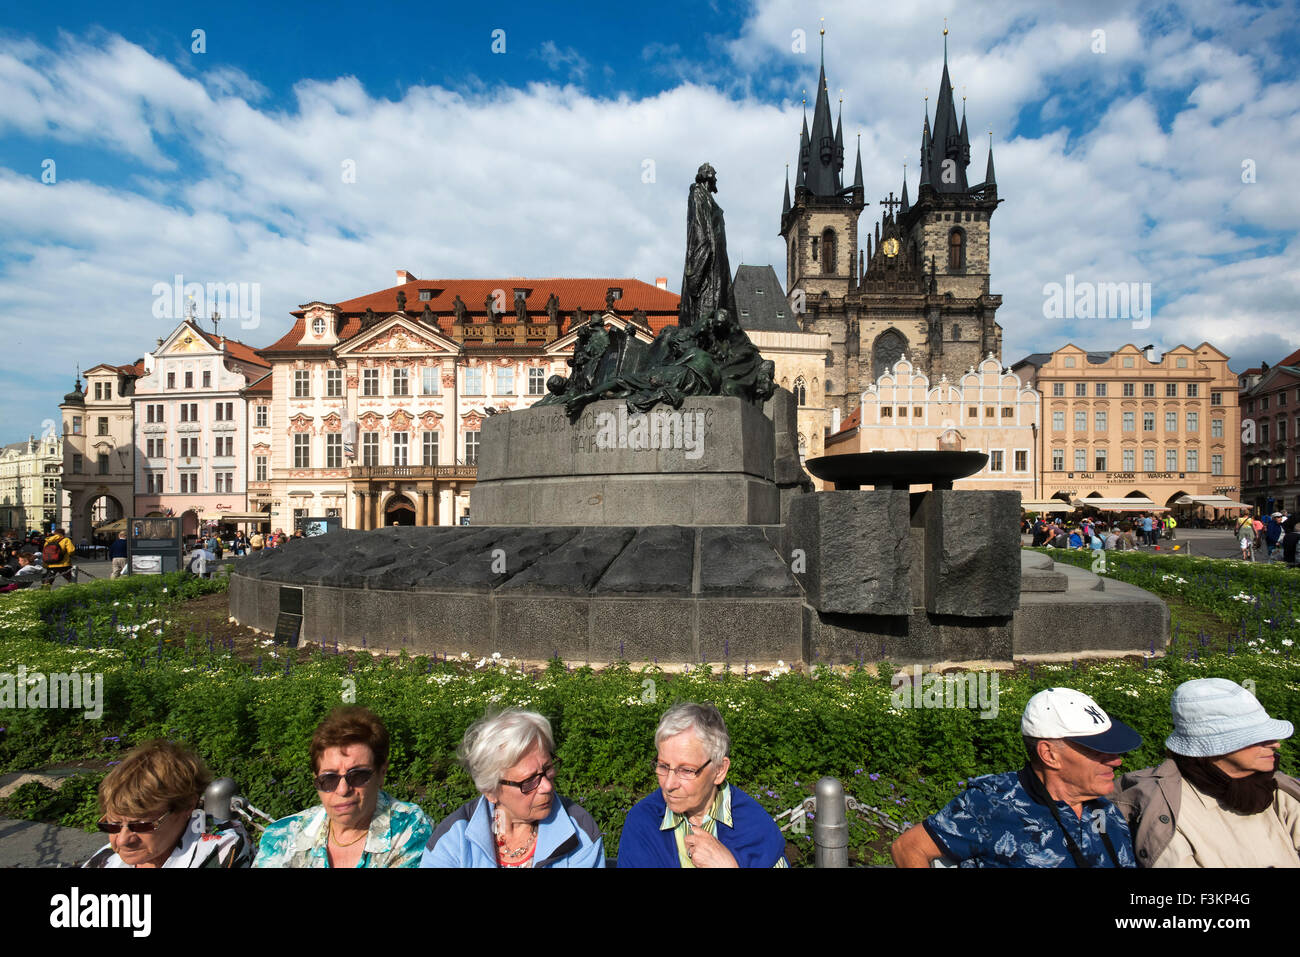 Kinsky Palace, Church of Our Lady before Tyn, Old Town Square, Jan Hus Monument, Staromestske Namesti, Prague, Czech republic Stock Photo